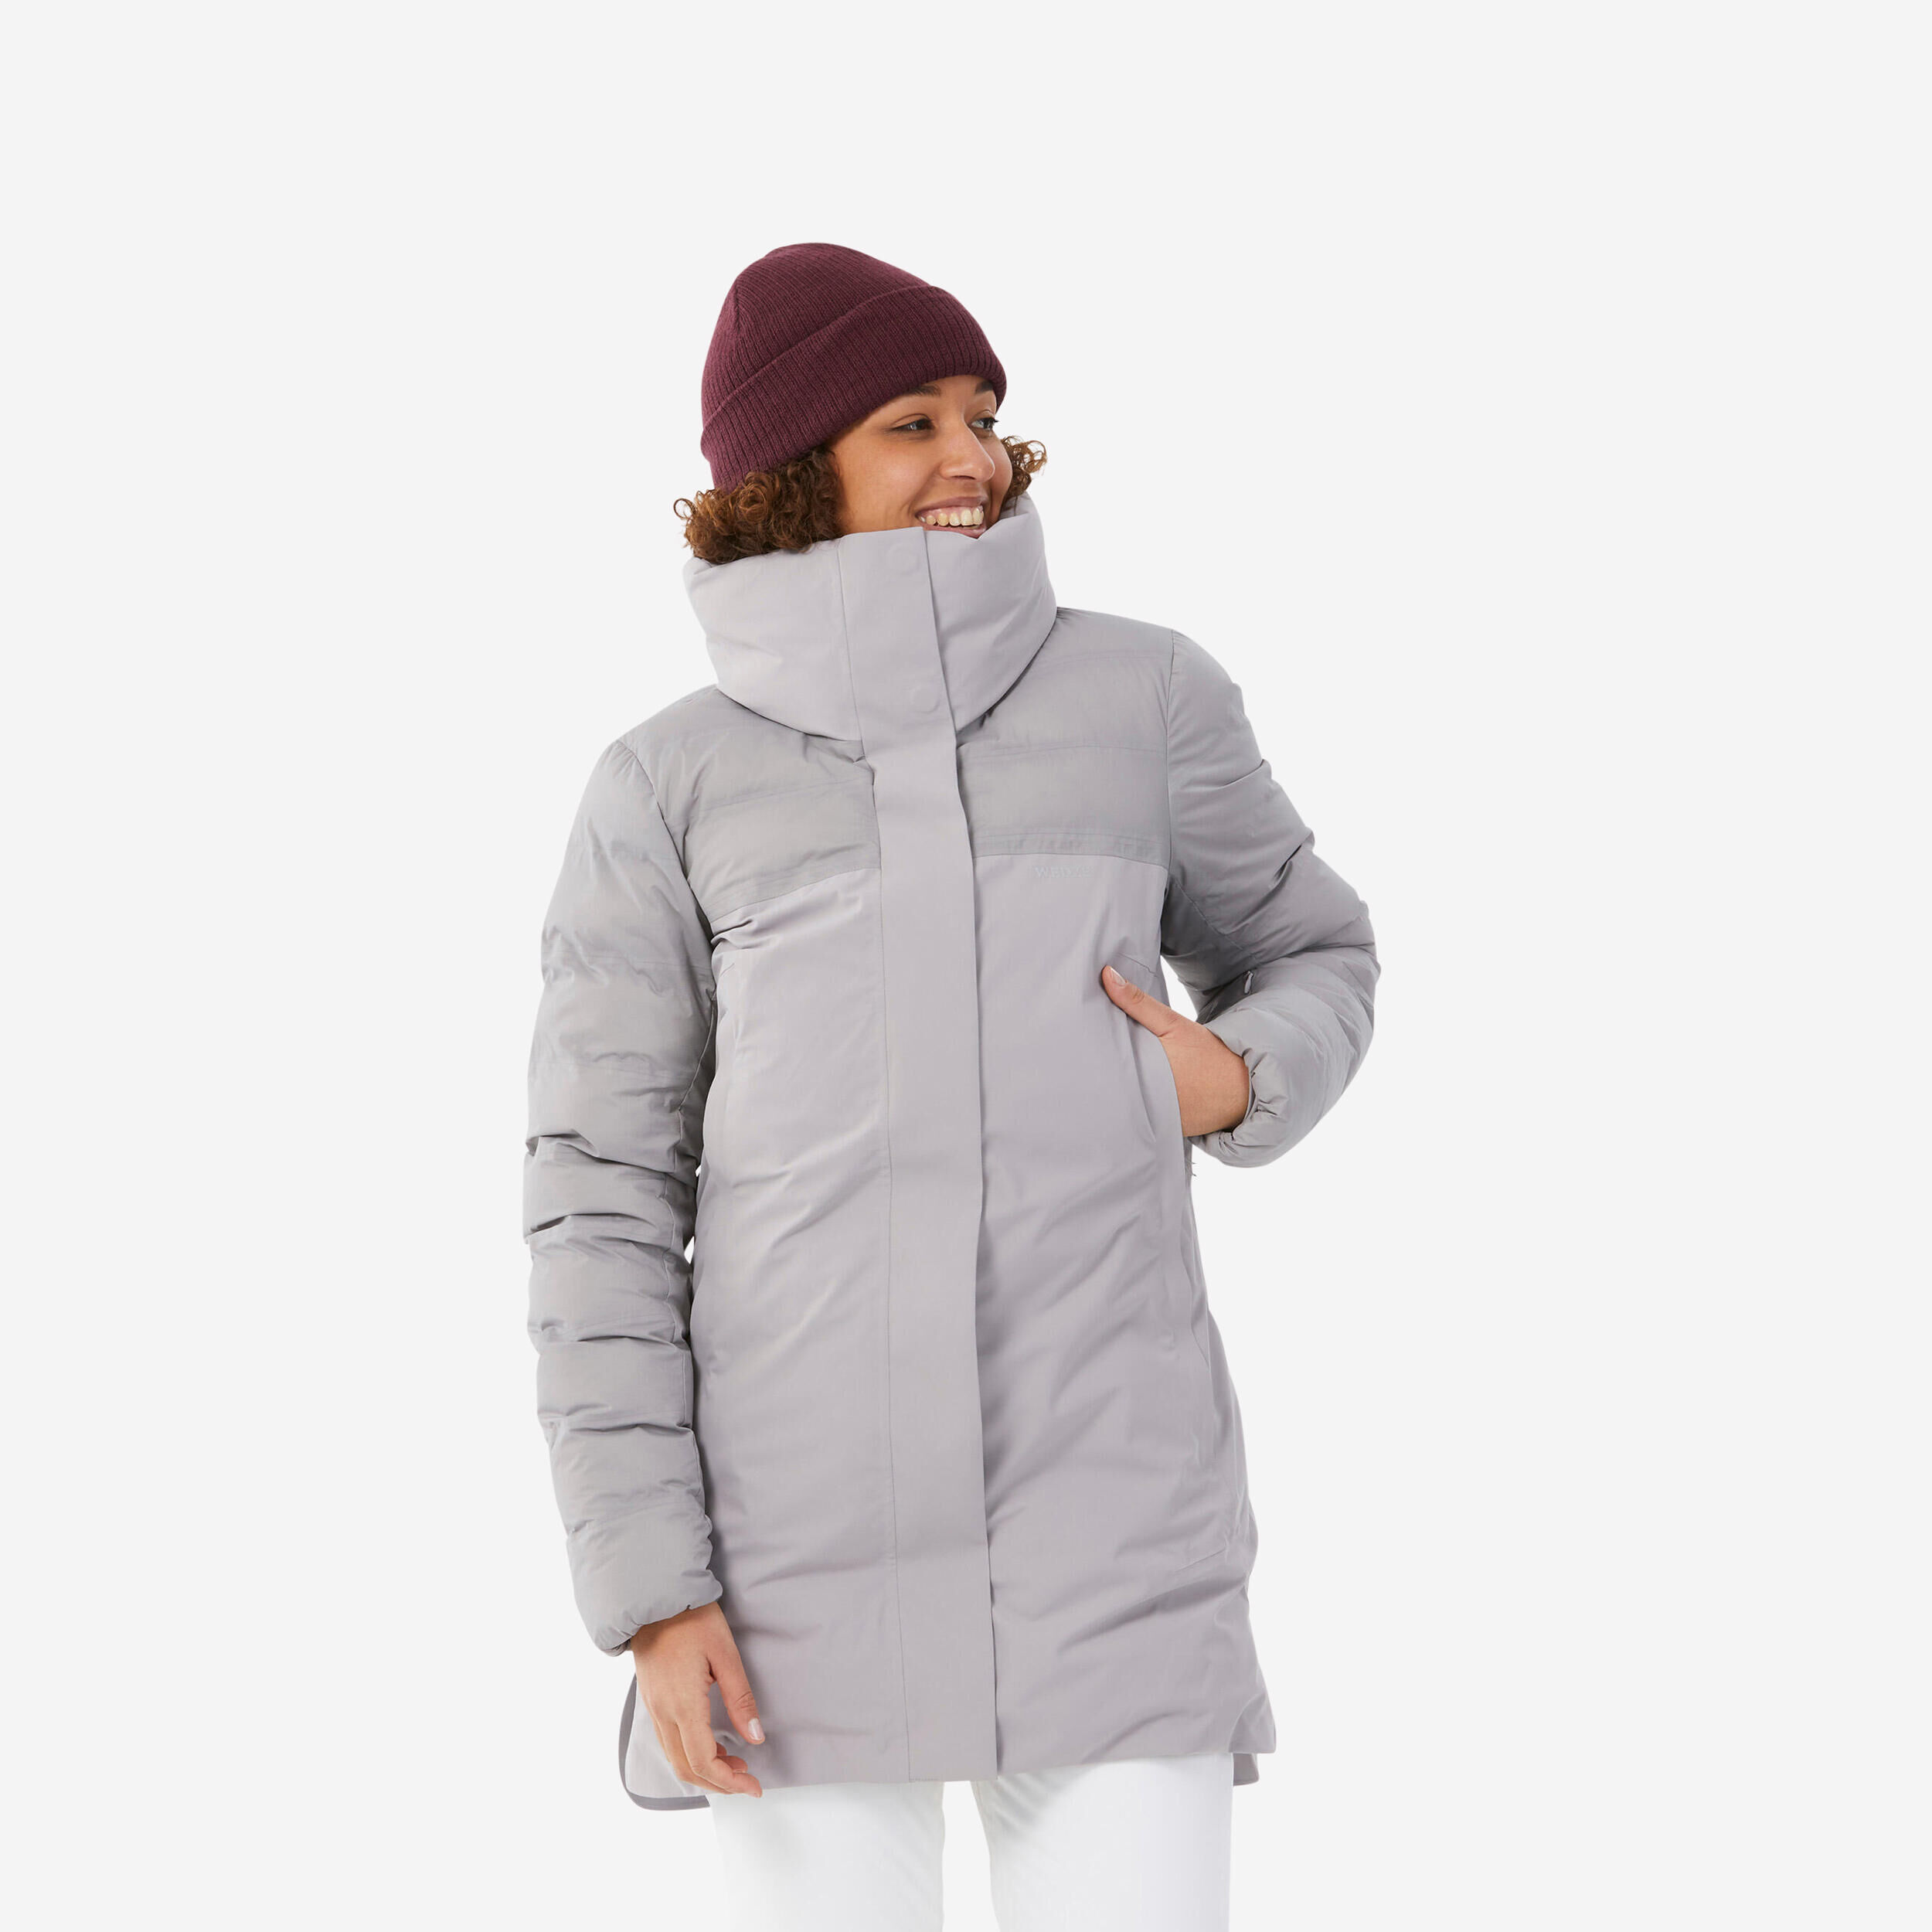 WEDZE Women's long warm ski jacket 500 - light grey